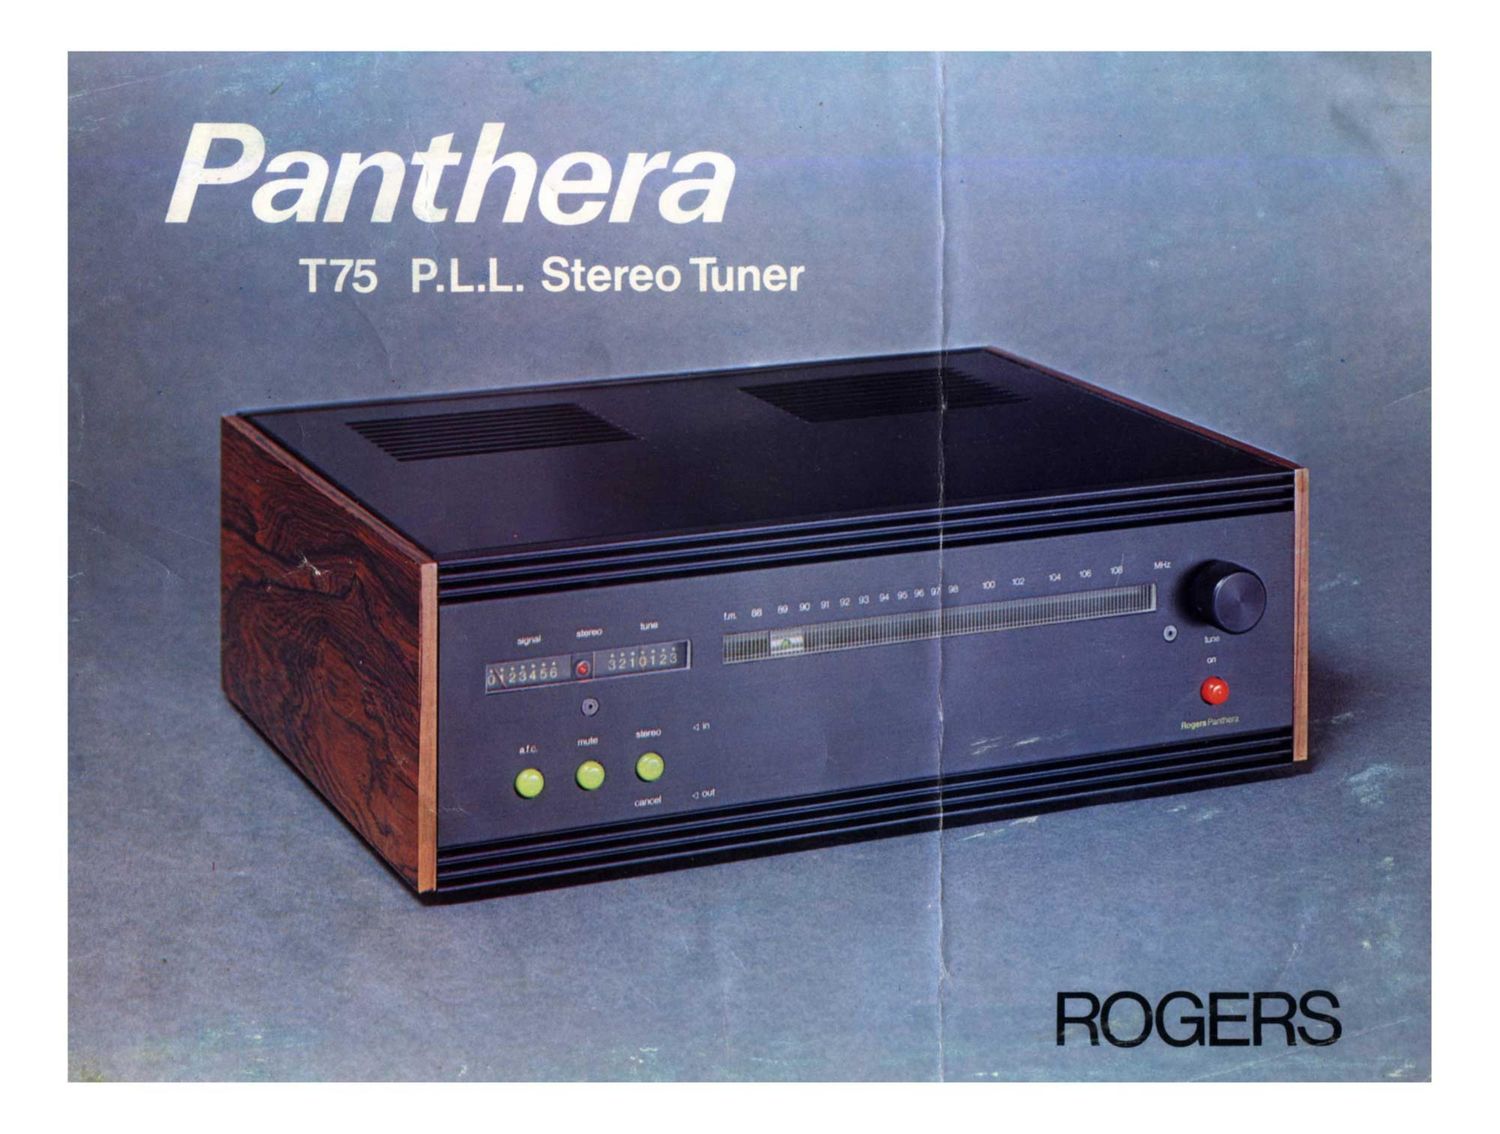 rogers panthera t75 brochure